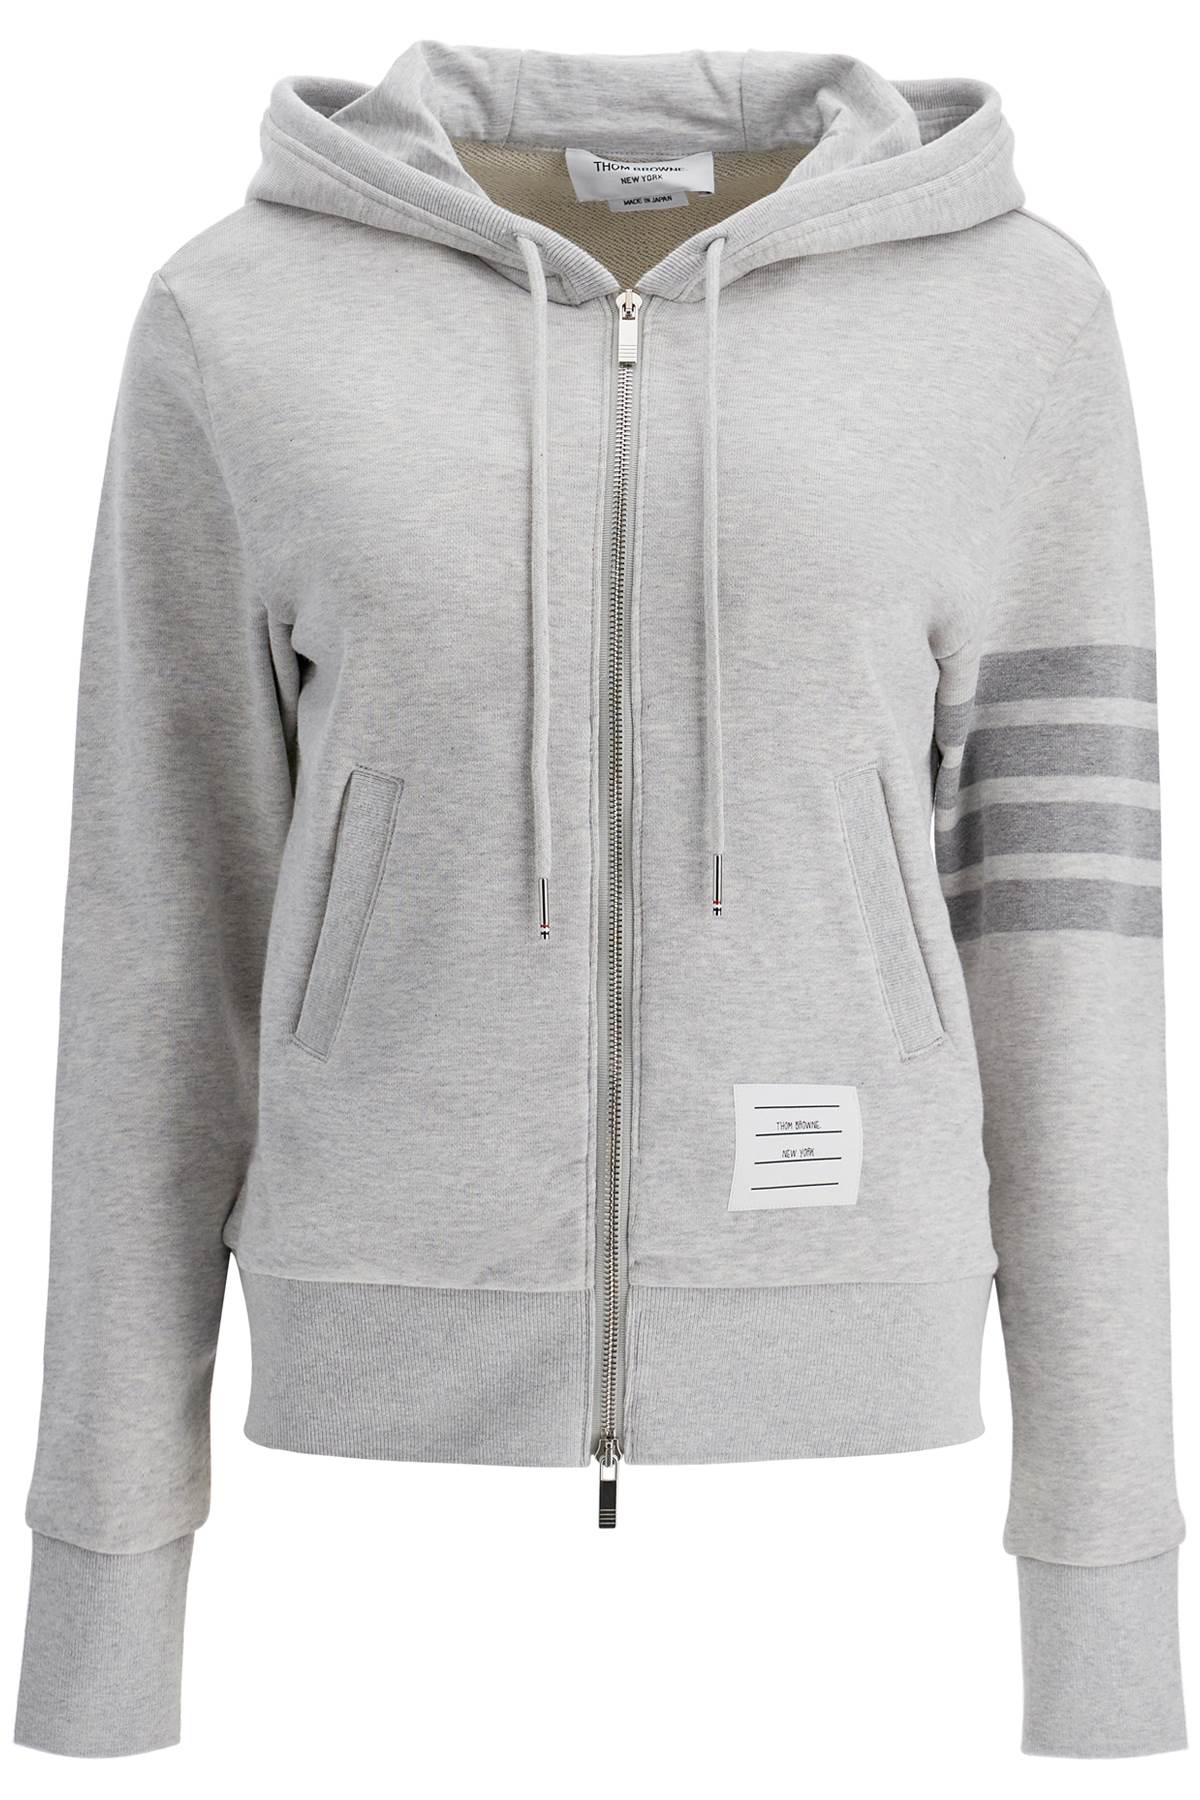 Thom Browne THOM BROWNE 4-bar hoodie with zipper and